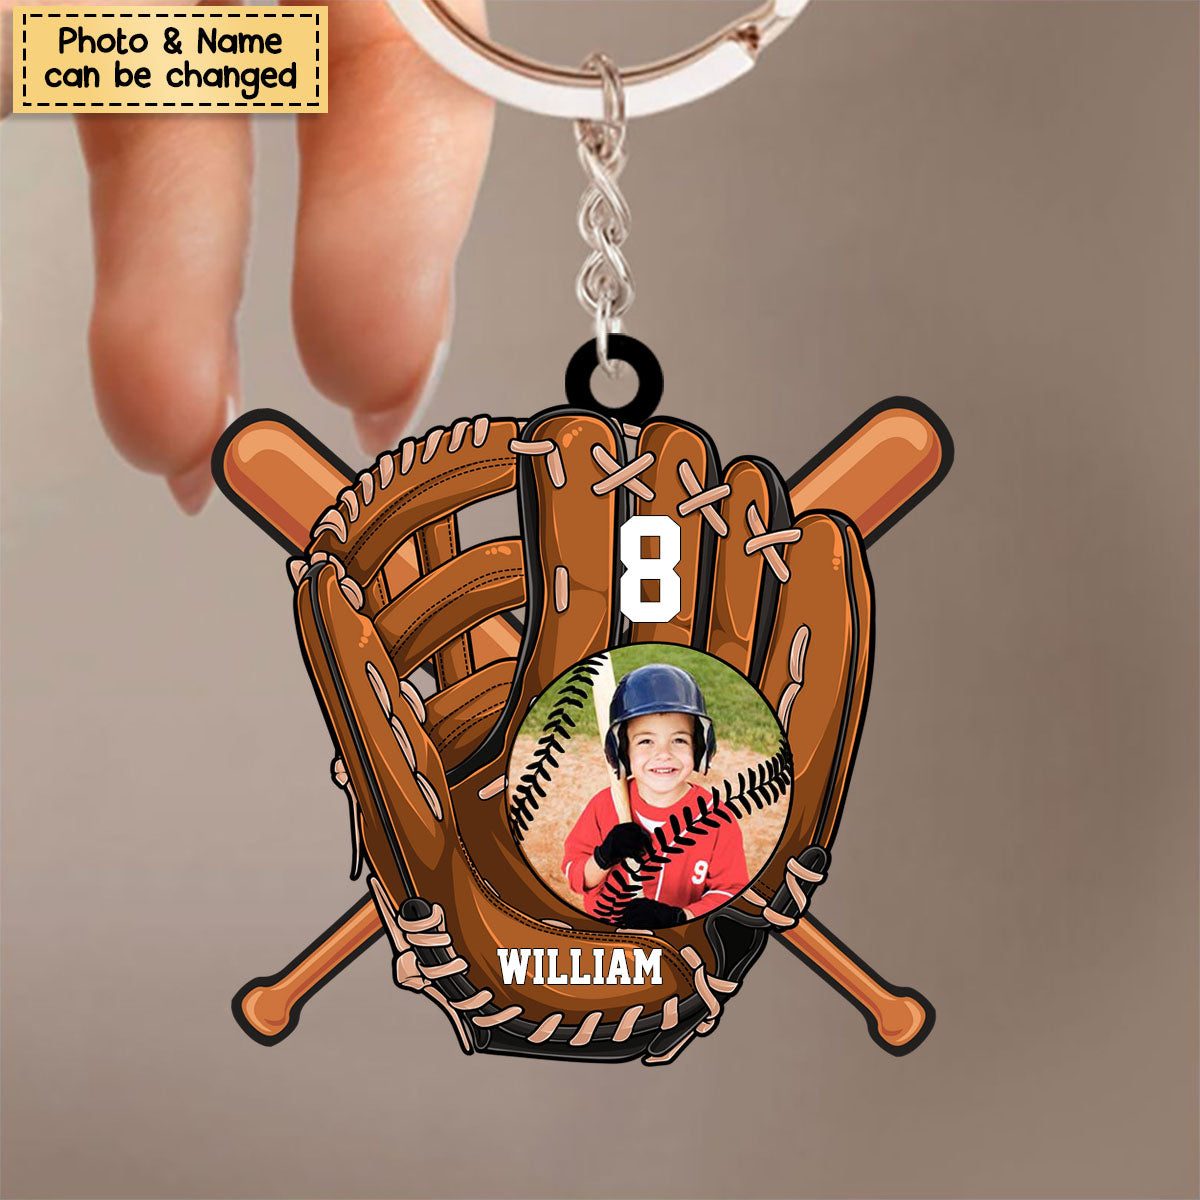 Gift For Grandson For Baseball Boy Upload Photo Personalized Acrylic Keychain